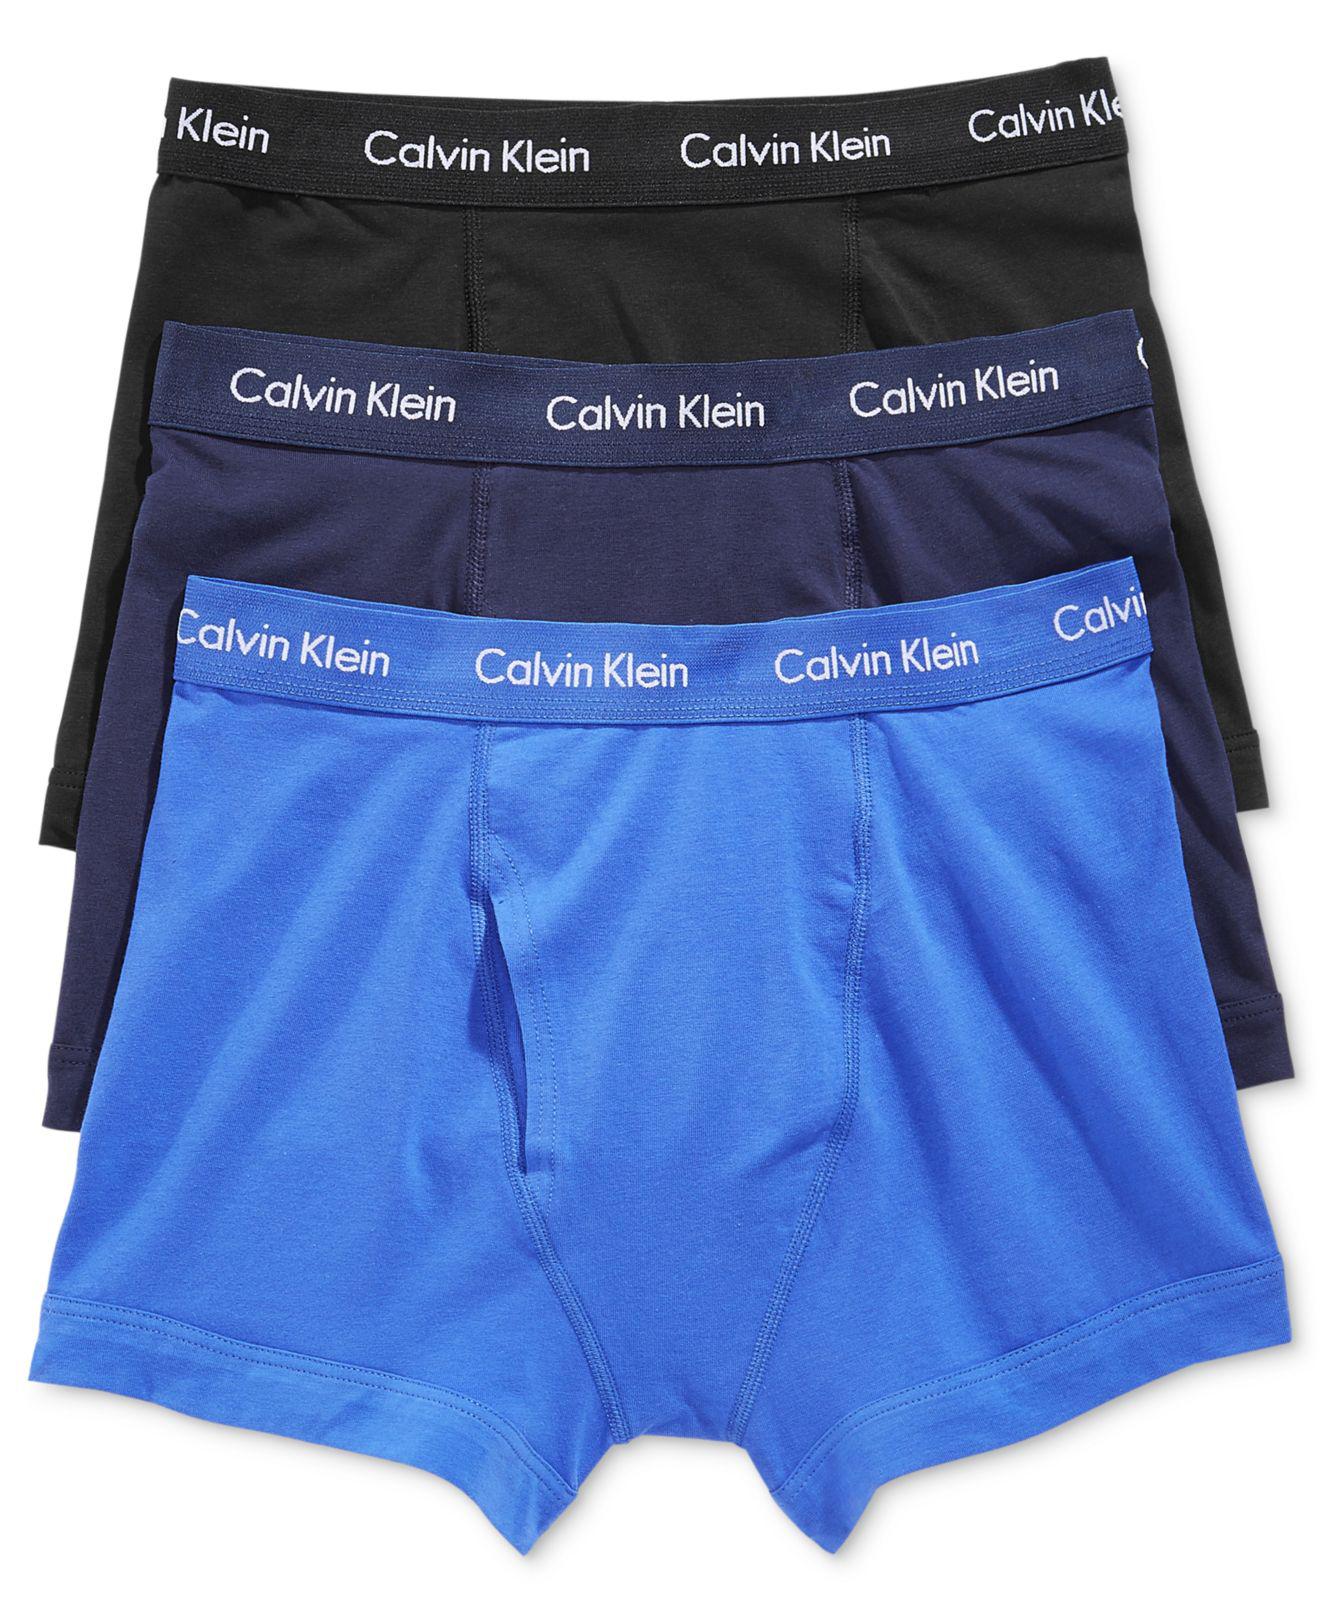 Calvin Klein Cotton Stretch Trunks 3-pack Nu2665 in Blue for Men - Lyst